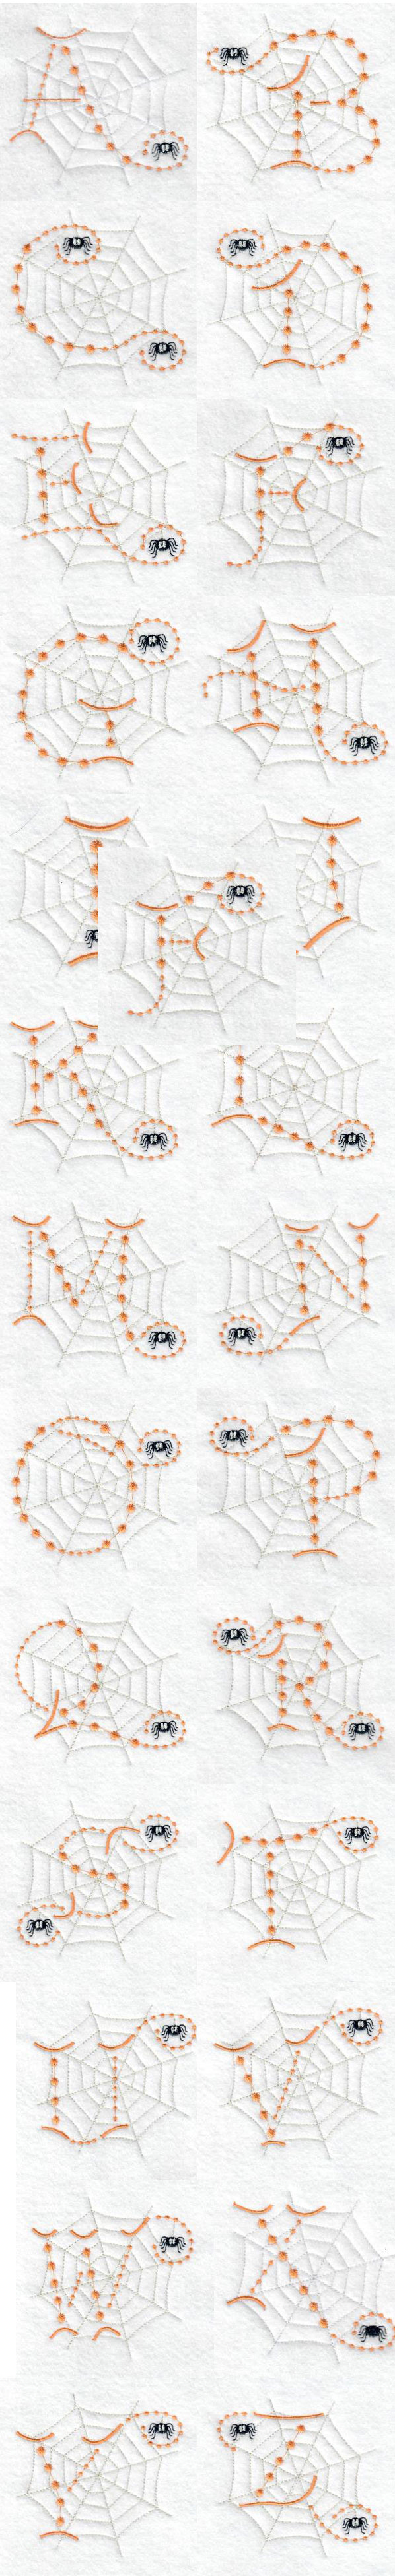 Cute Candlewick Spider Alphabet Embroidery Machine Design Details